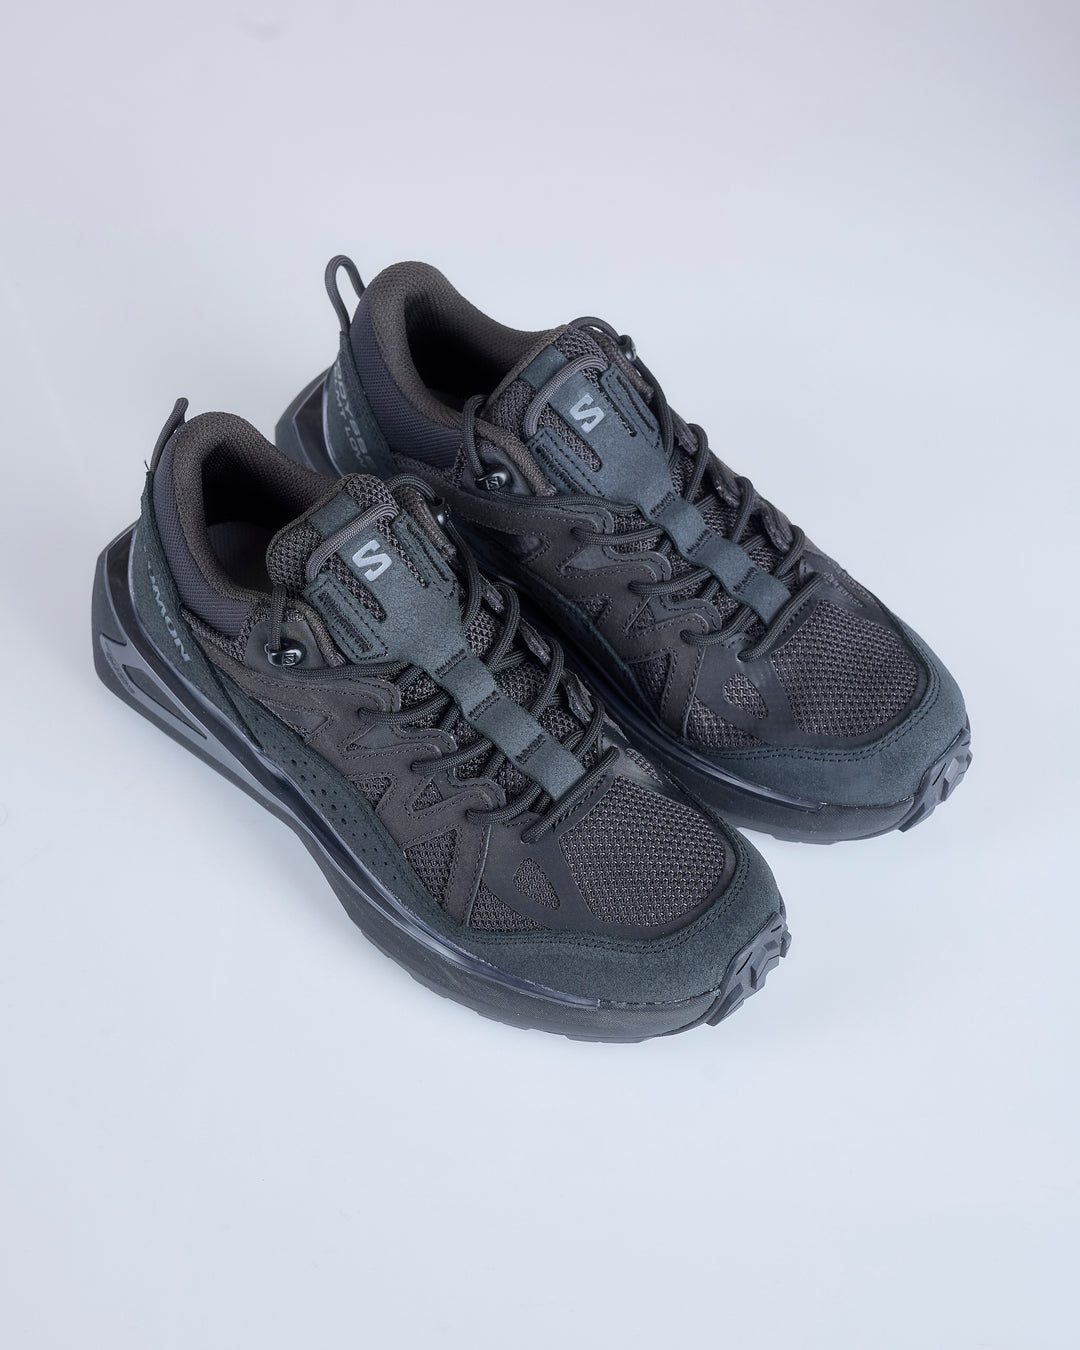 Salomon - Odyssey Advanced Suede and Mesh Hiking Shoes - Black Salomon